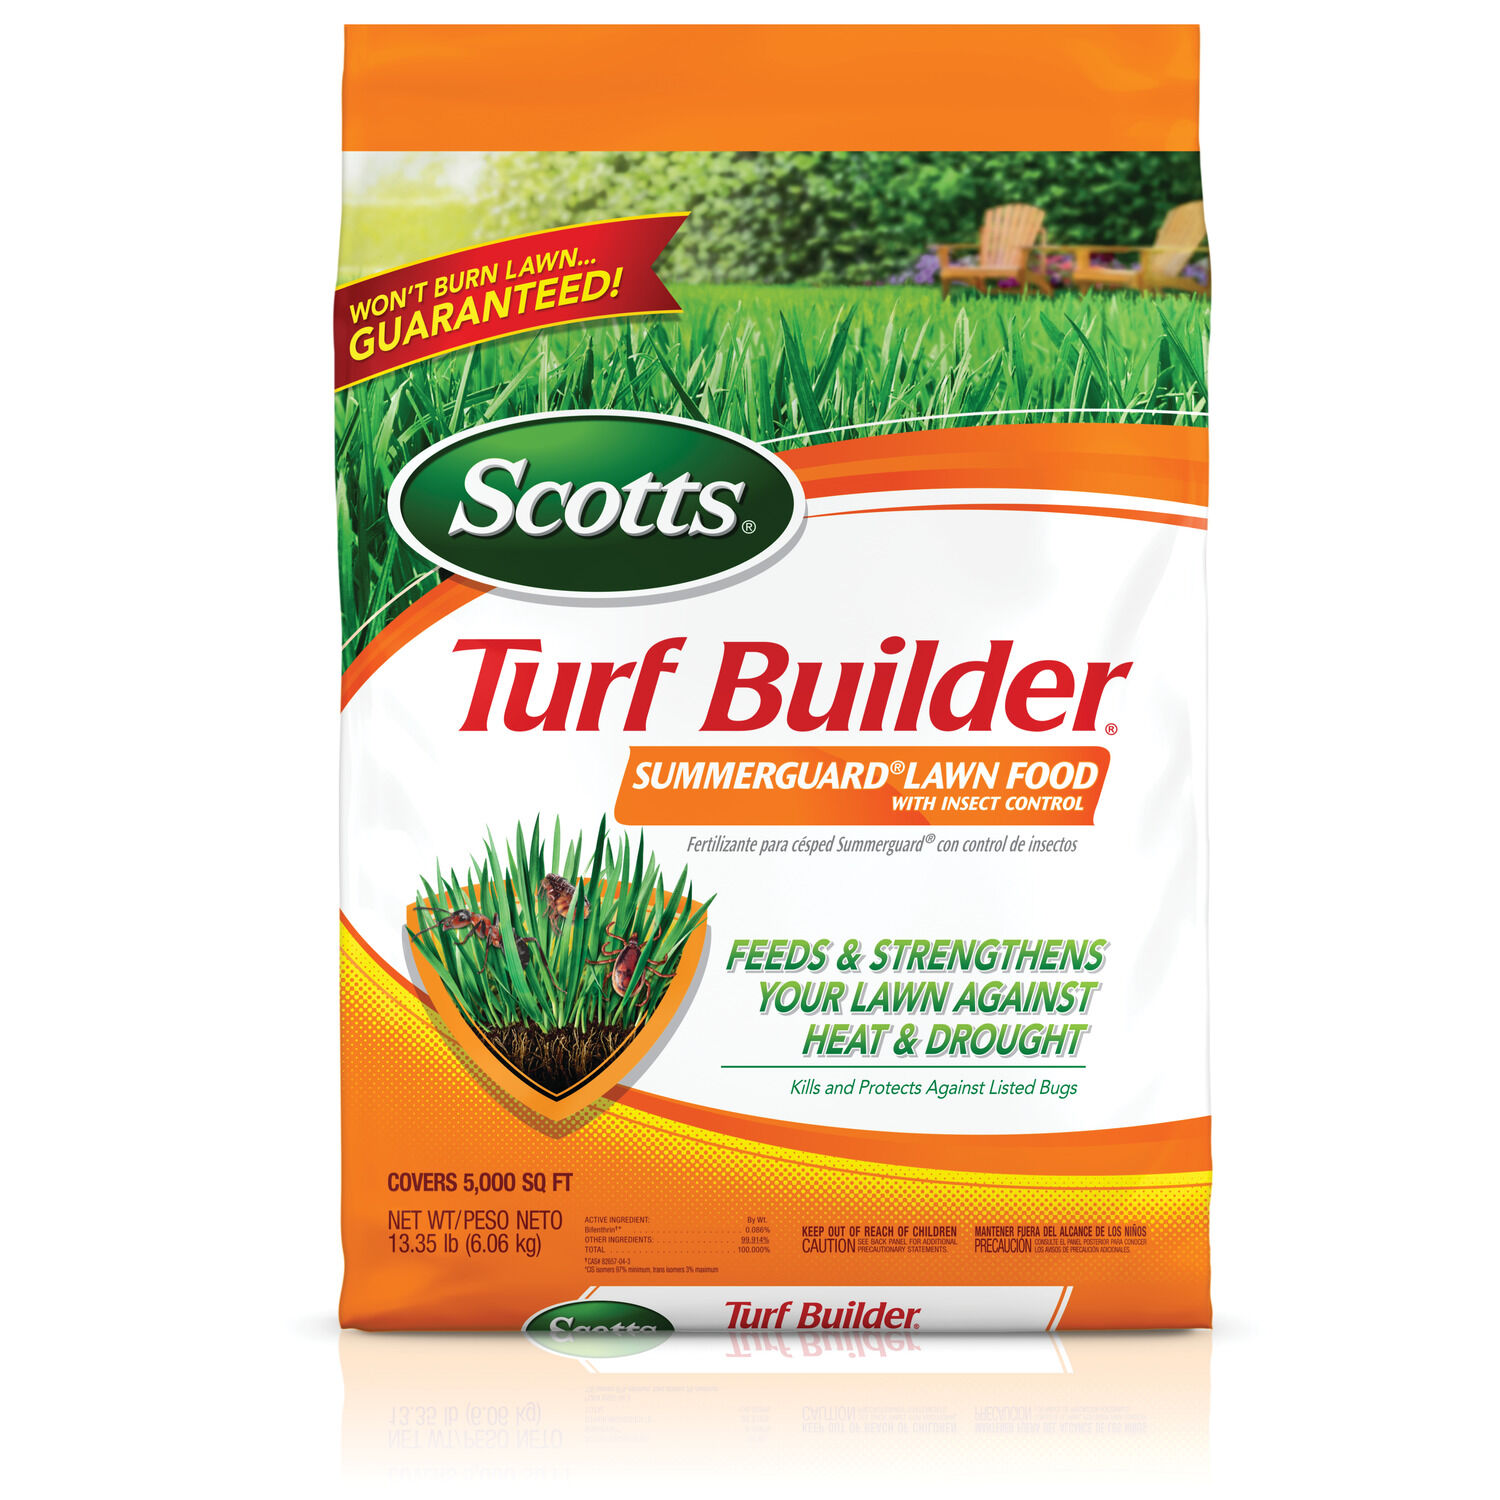 Image of Scotts Turf Builder SummerGuard fertilizer image